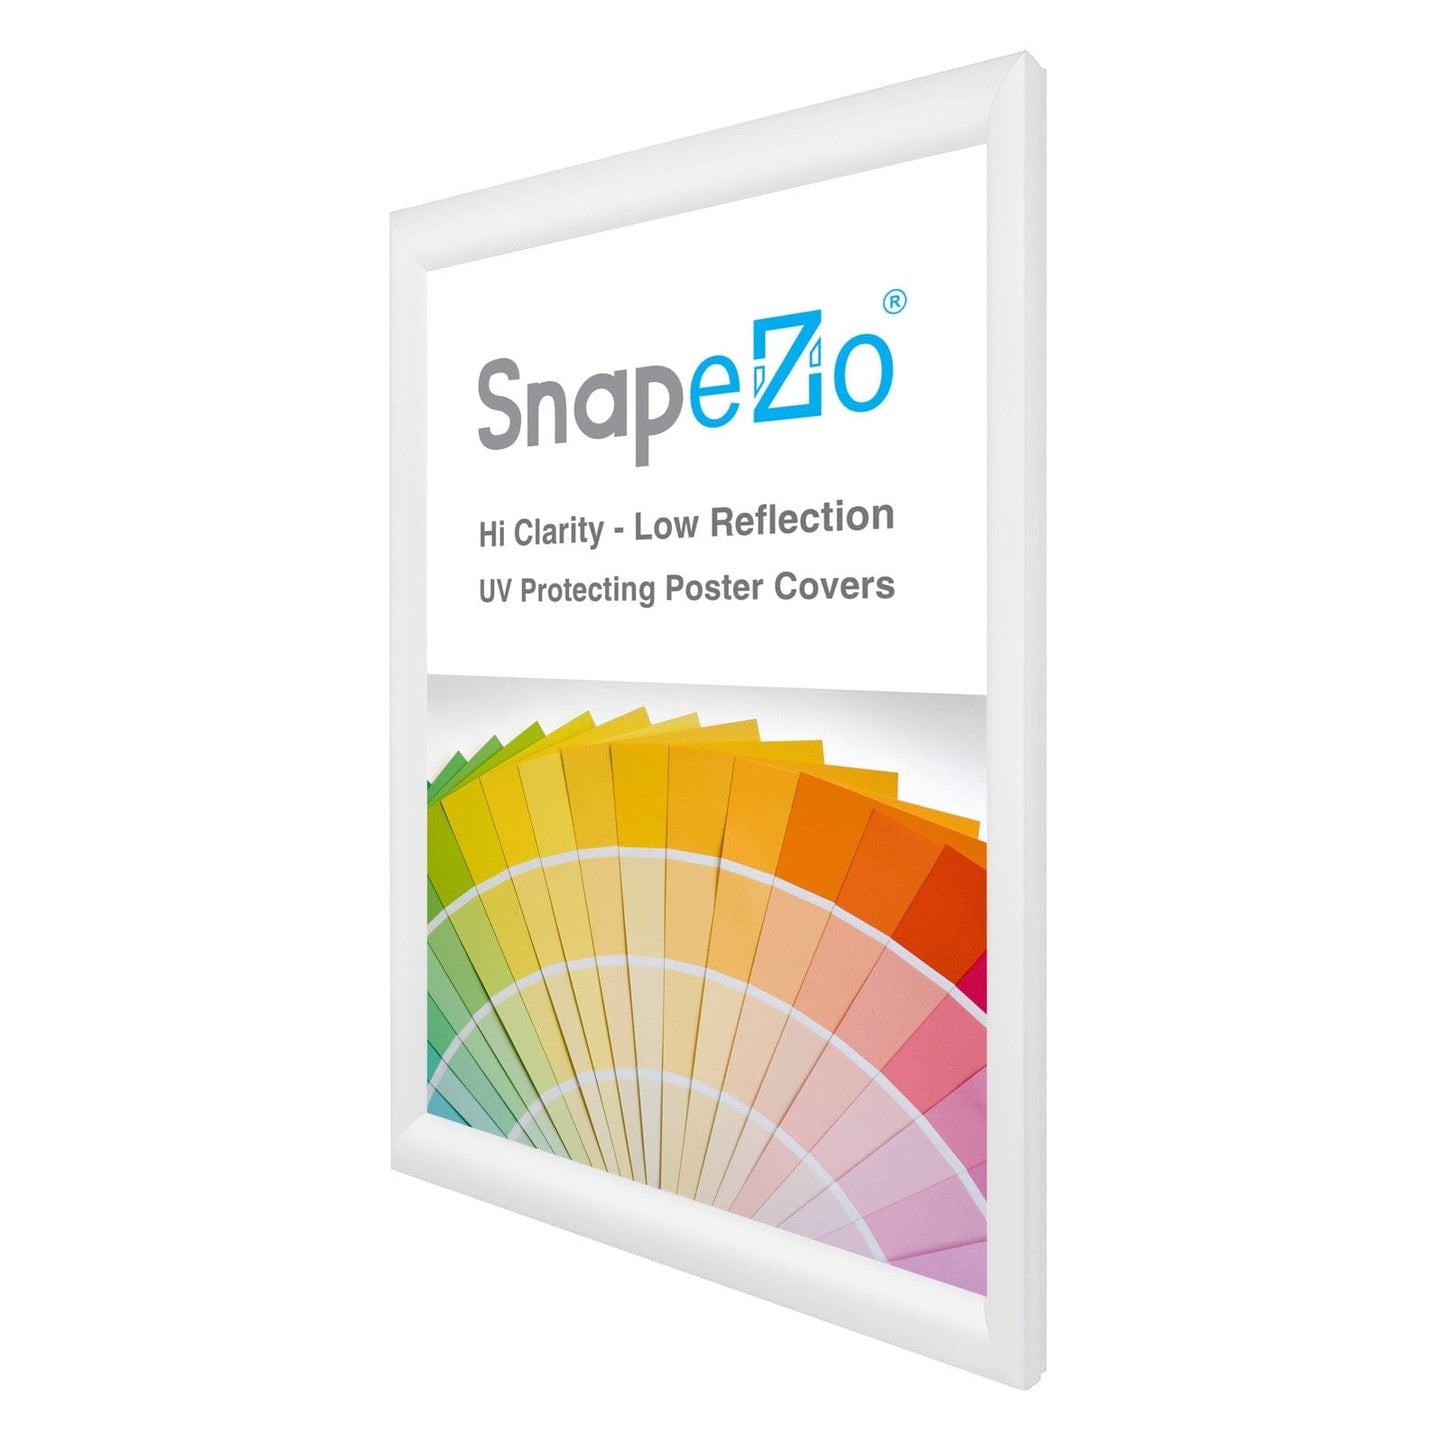 16x24 White SnapeZo® Snap Frame - 1.2" Profile - Snap Frames Direct